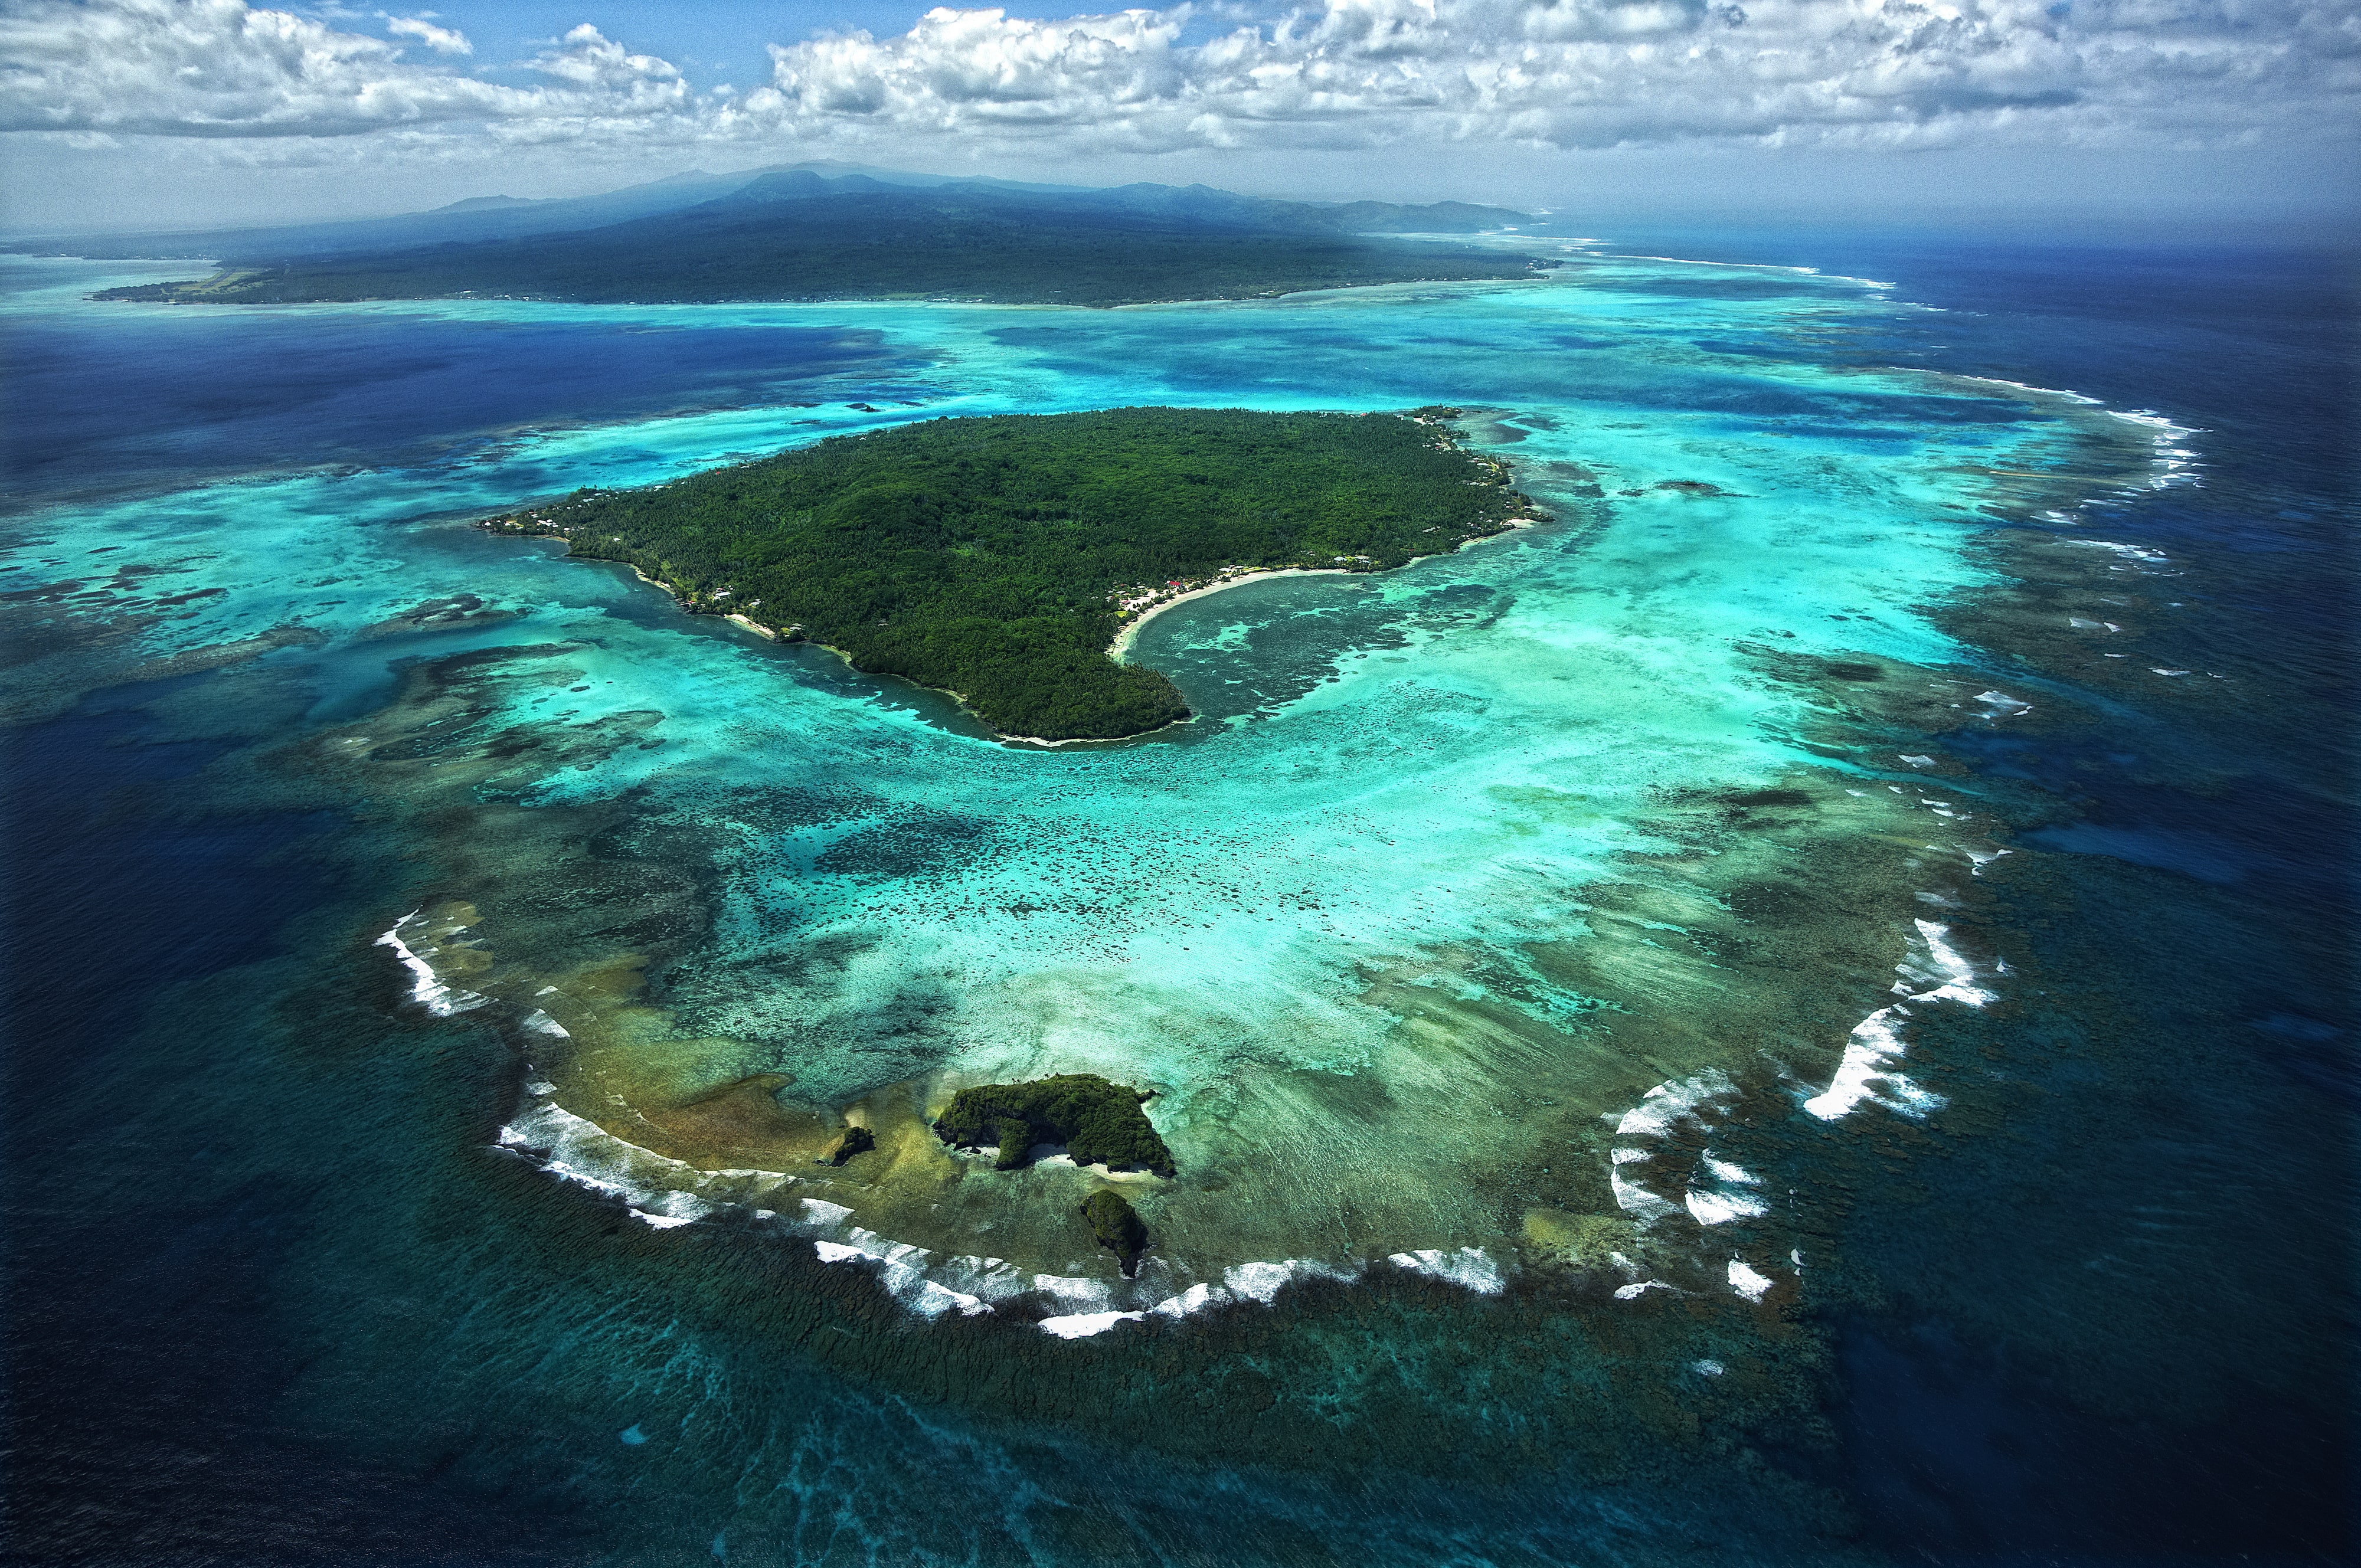 Млн тихого океана. Остров Уполу Самоа. Архипелаг Самоа, остров Уполу. Тихий океан Самоа. Самоа Фиджи.